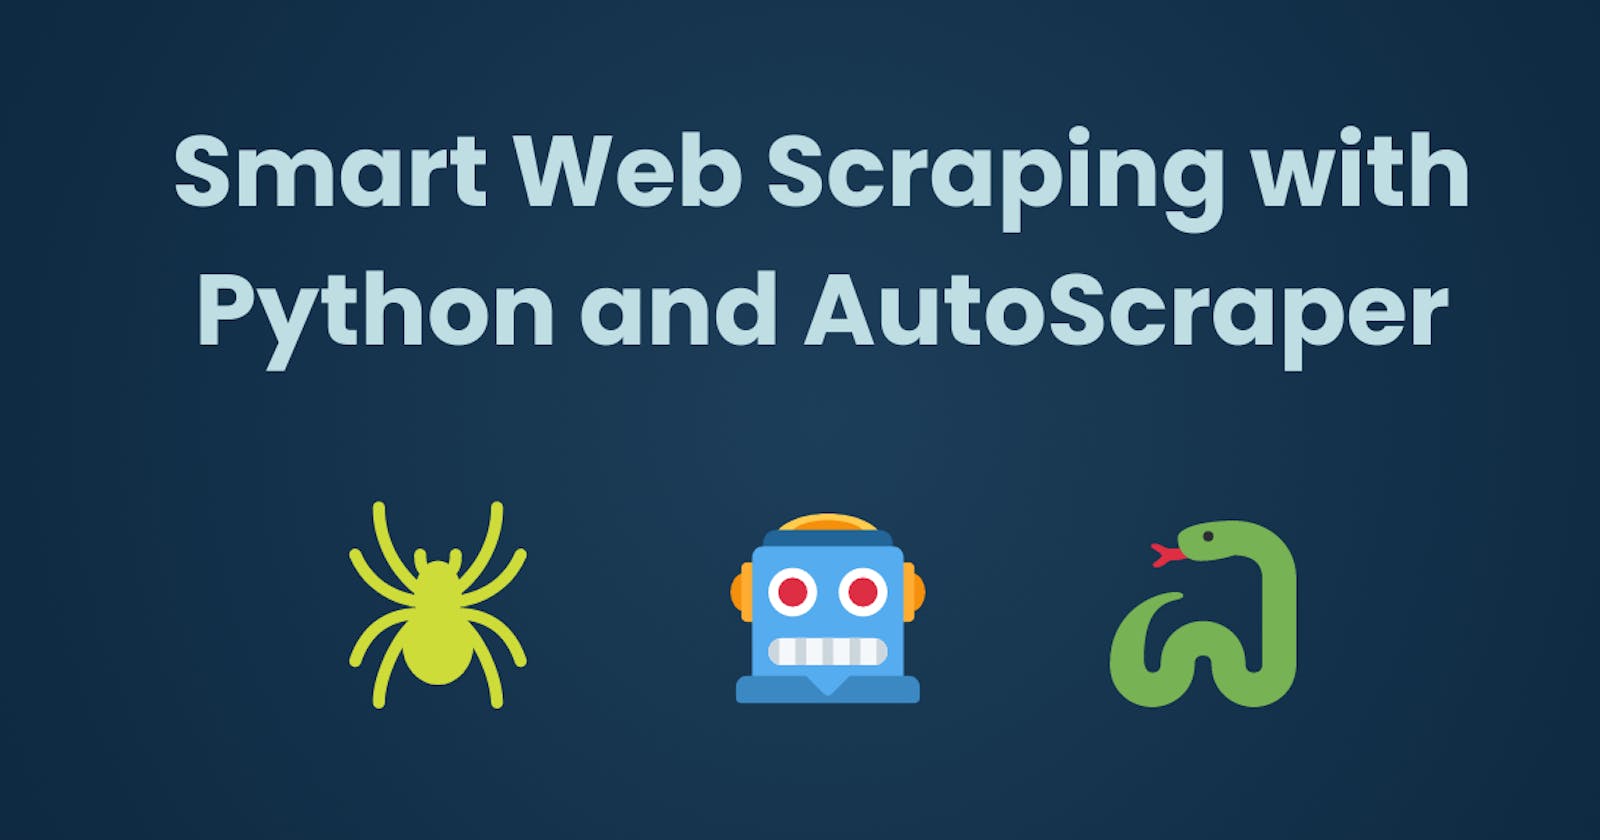 AutoScraper: A Smart, Fast and Lightweight Automatic Web Scraper for Python